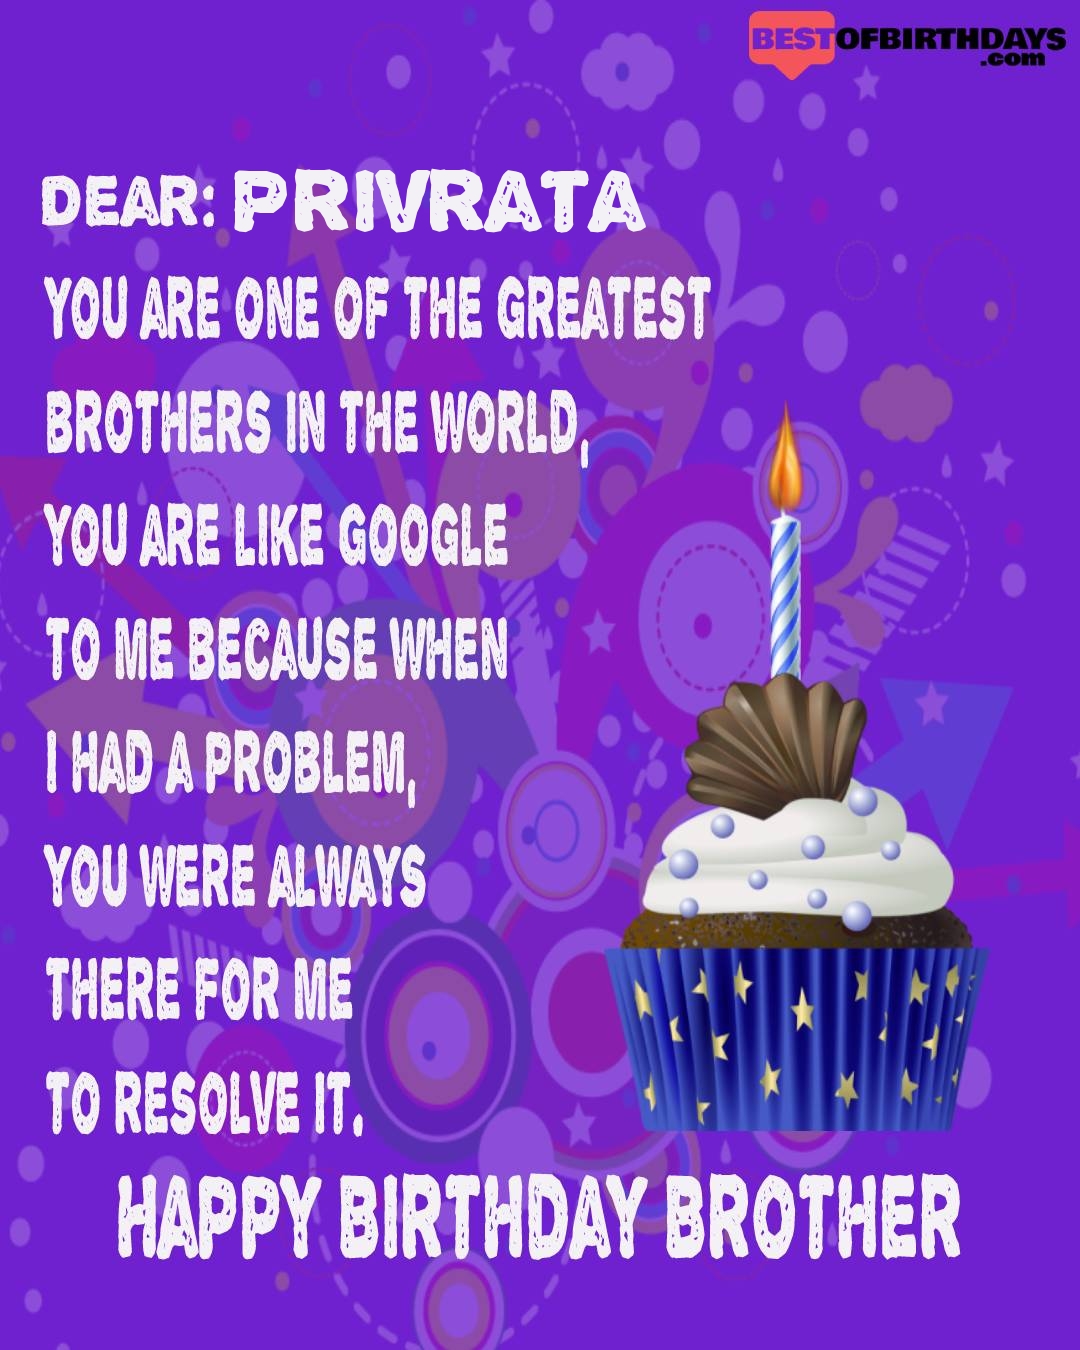 Happy birthday privrata bhai brother bro